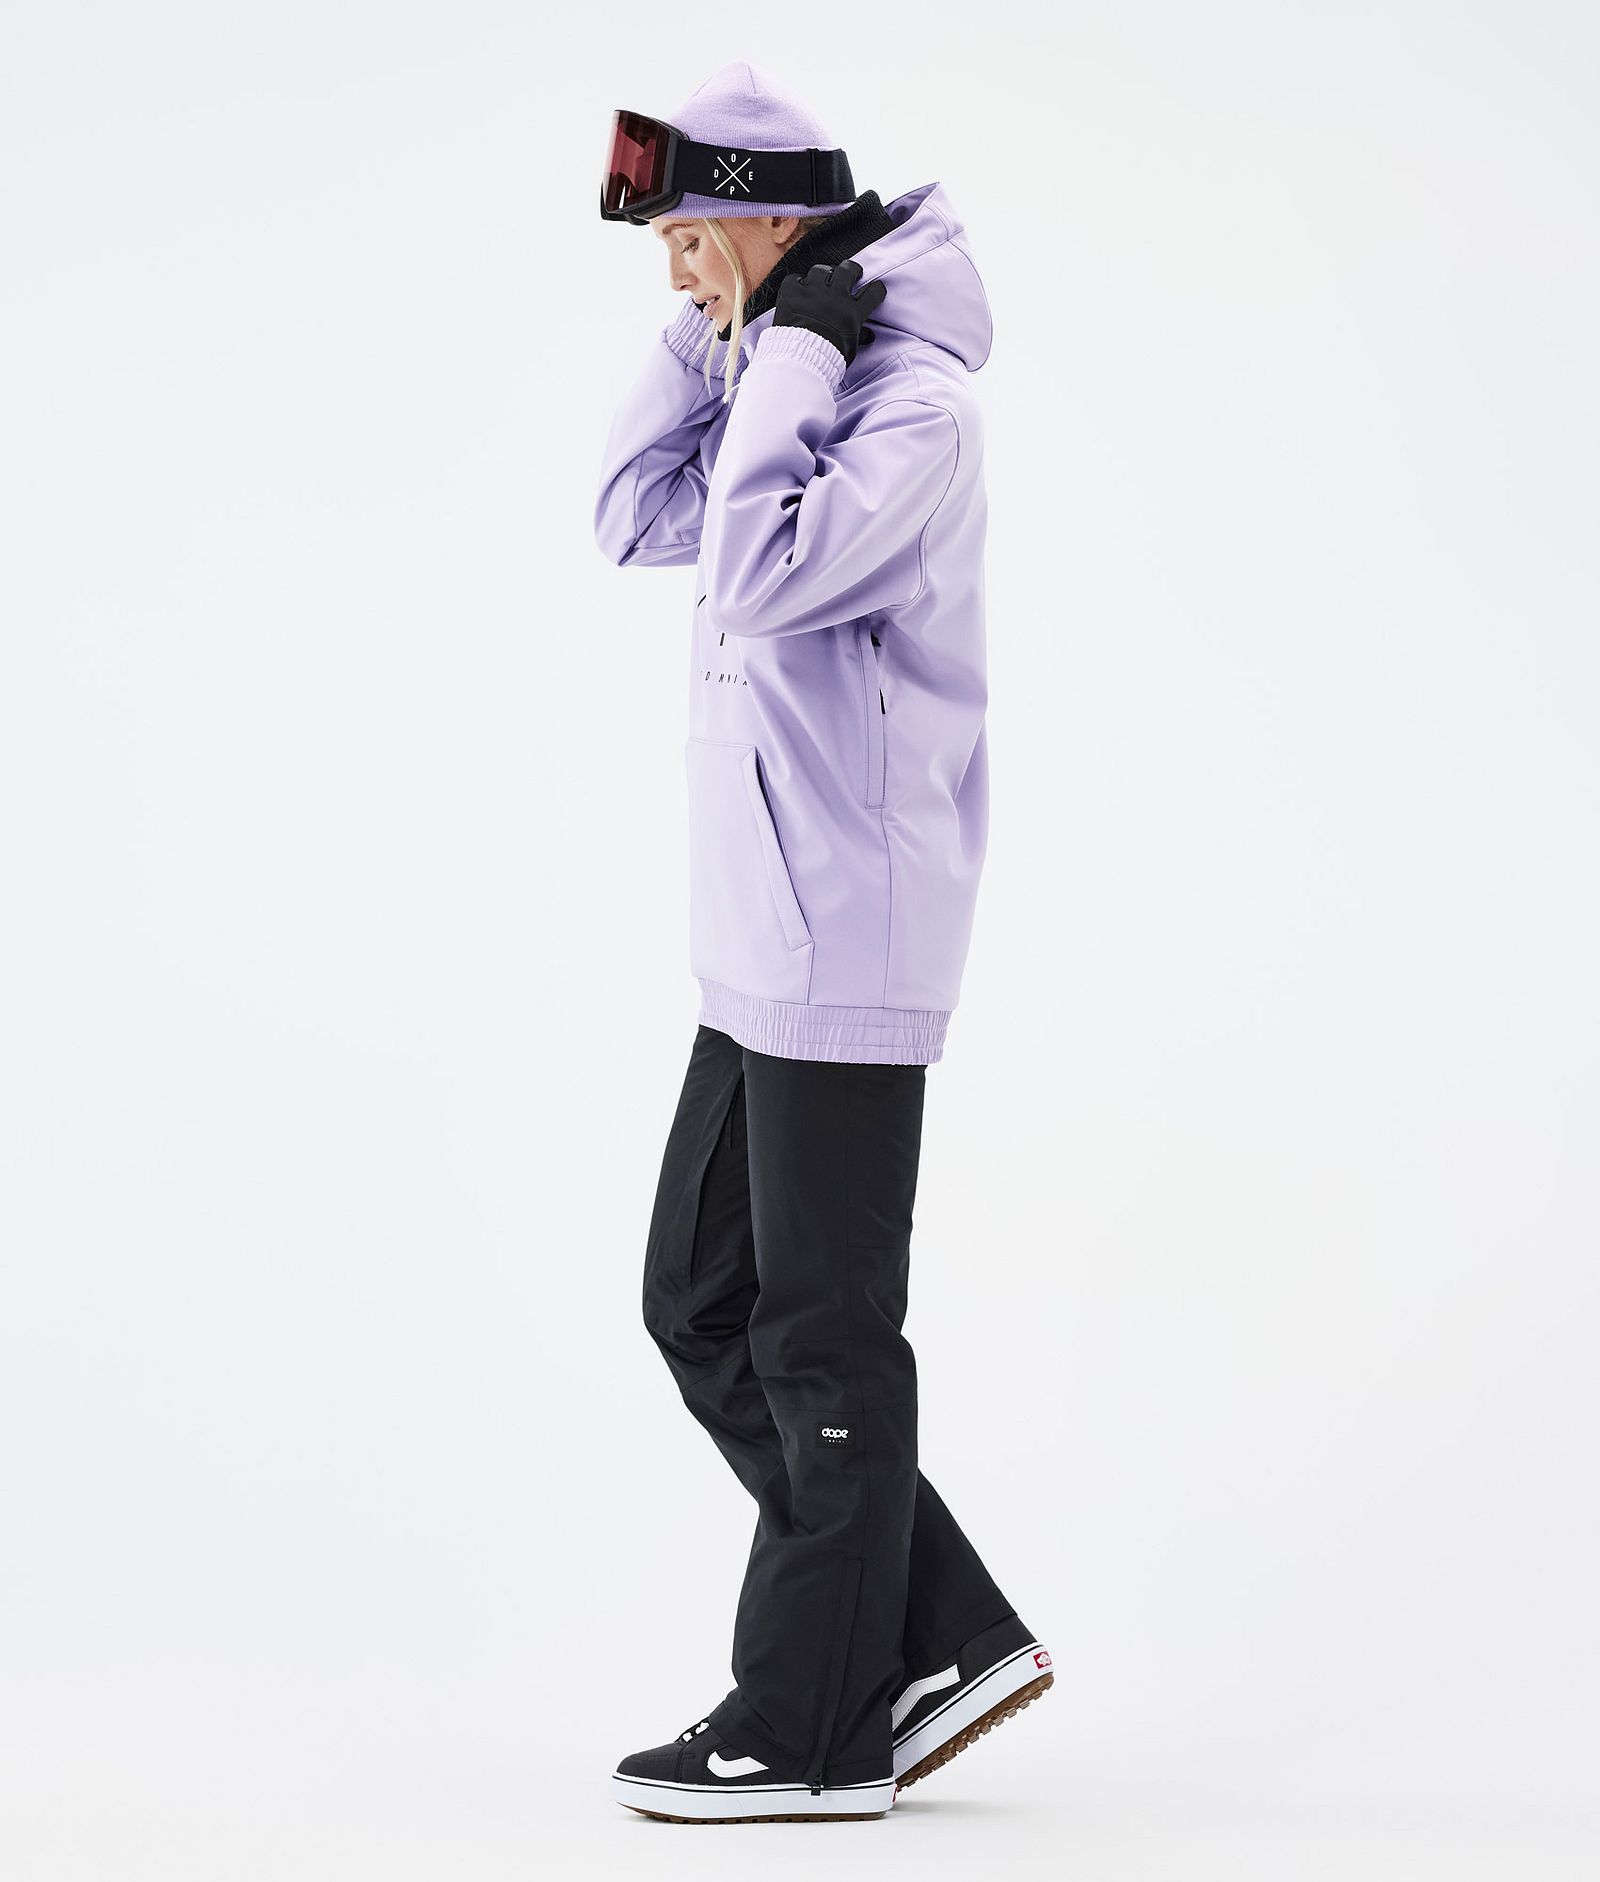 Dope Yeti W Snowboard Jacket Women 2X-Up Faded Violet Renewed